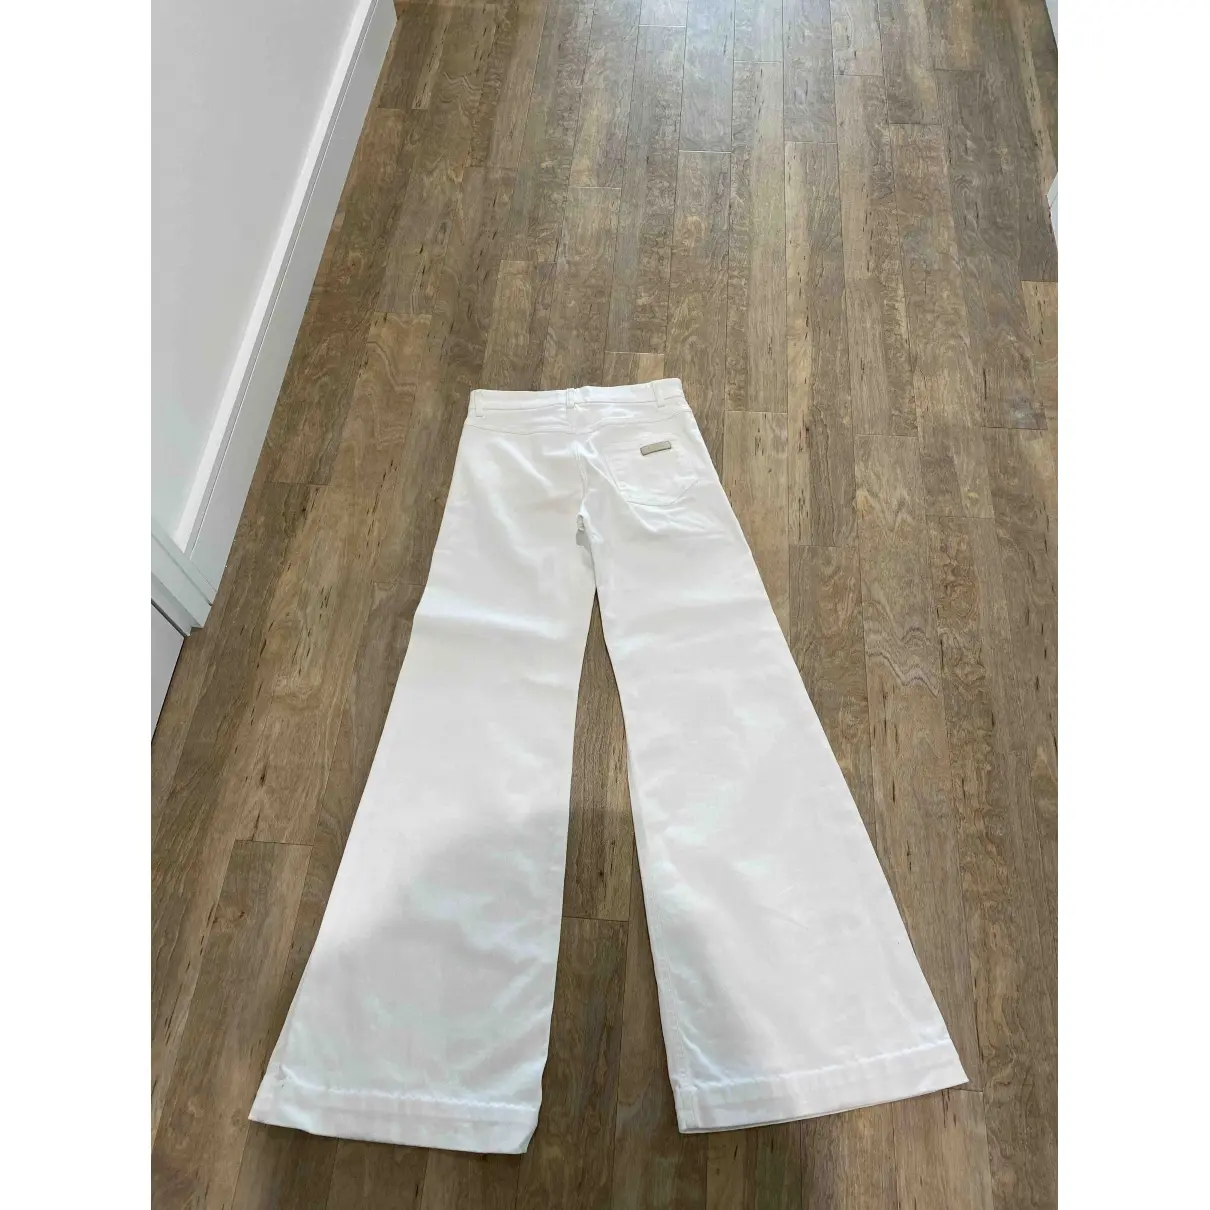 Chloé Straight jeans for sale